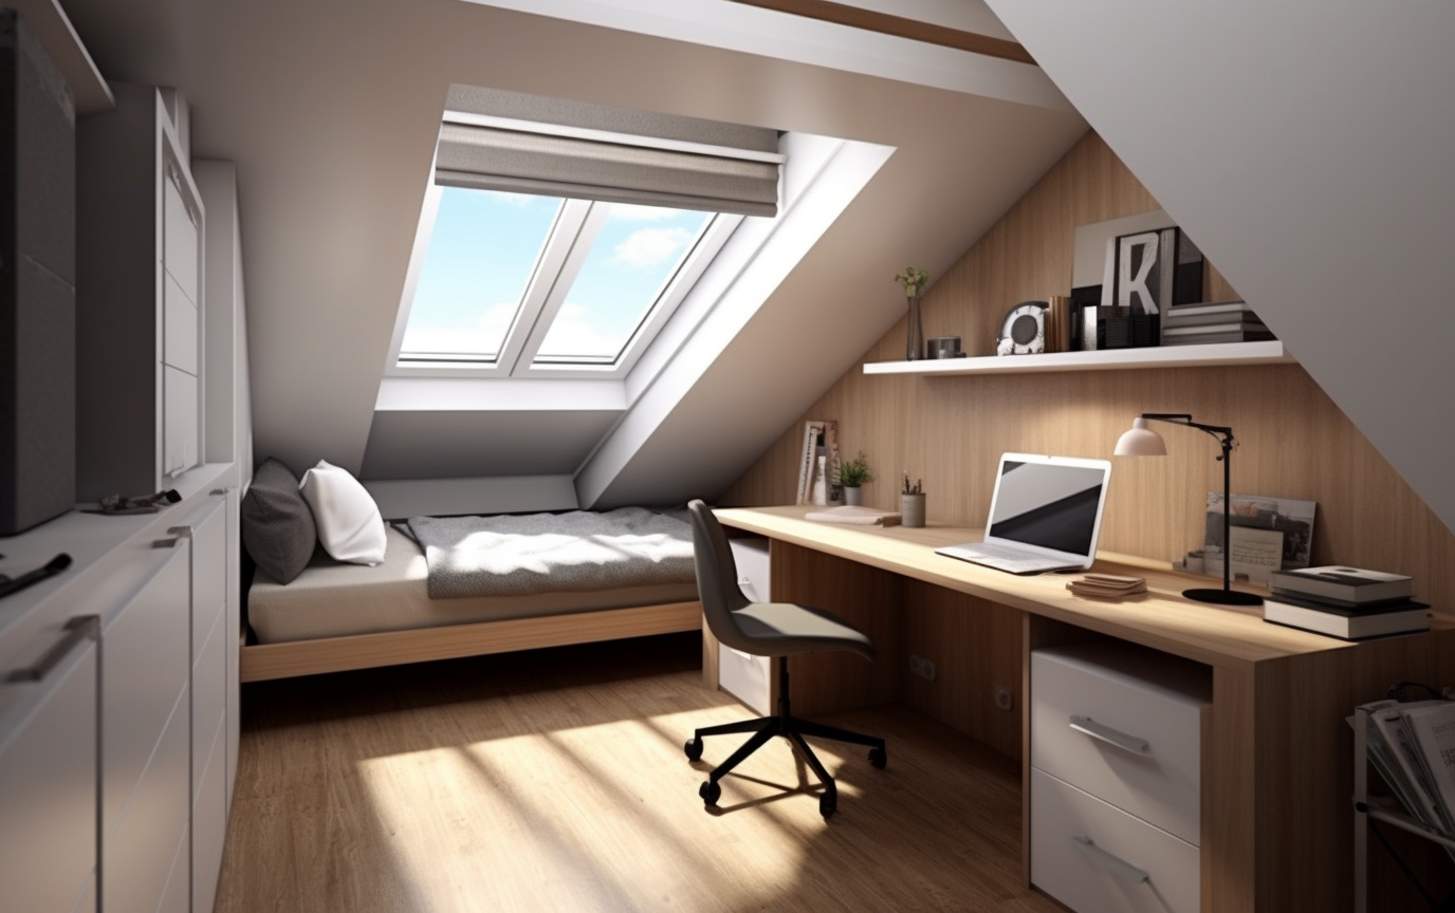 loft bedroom With floating shelfs